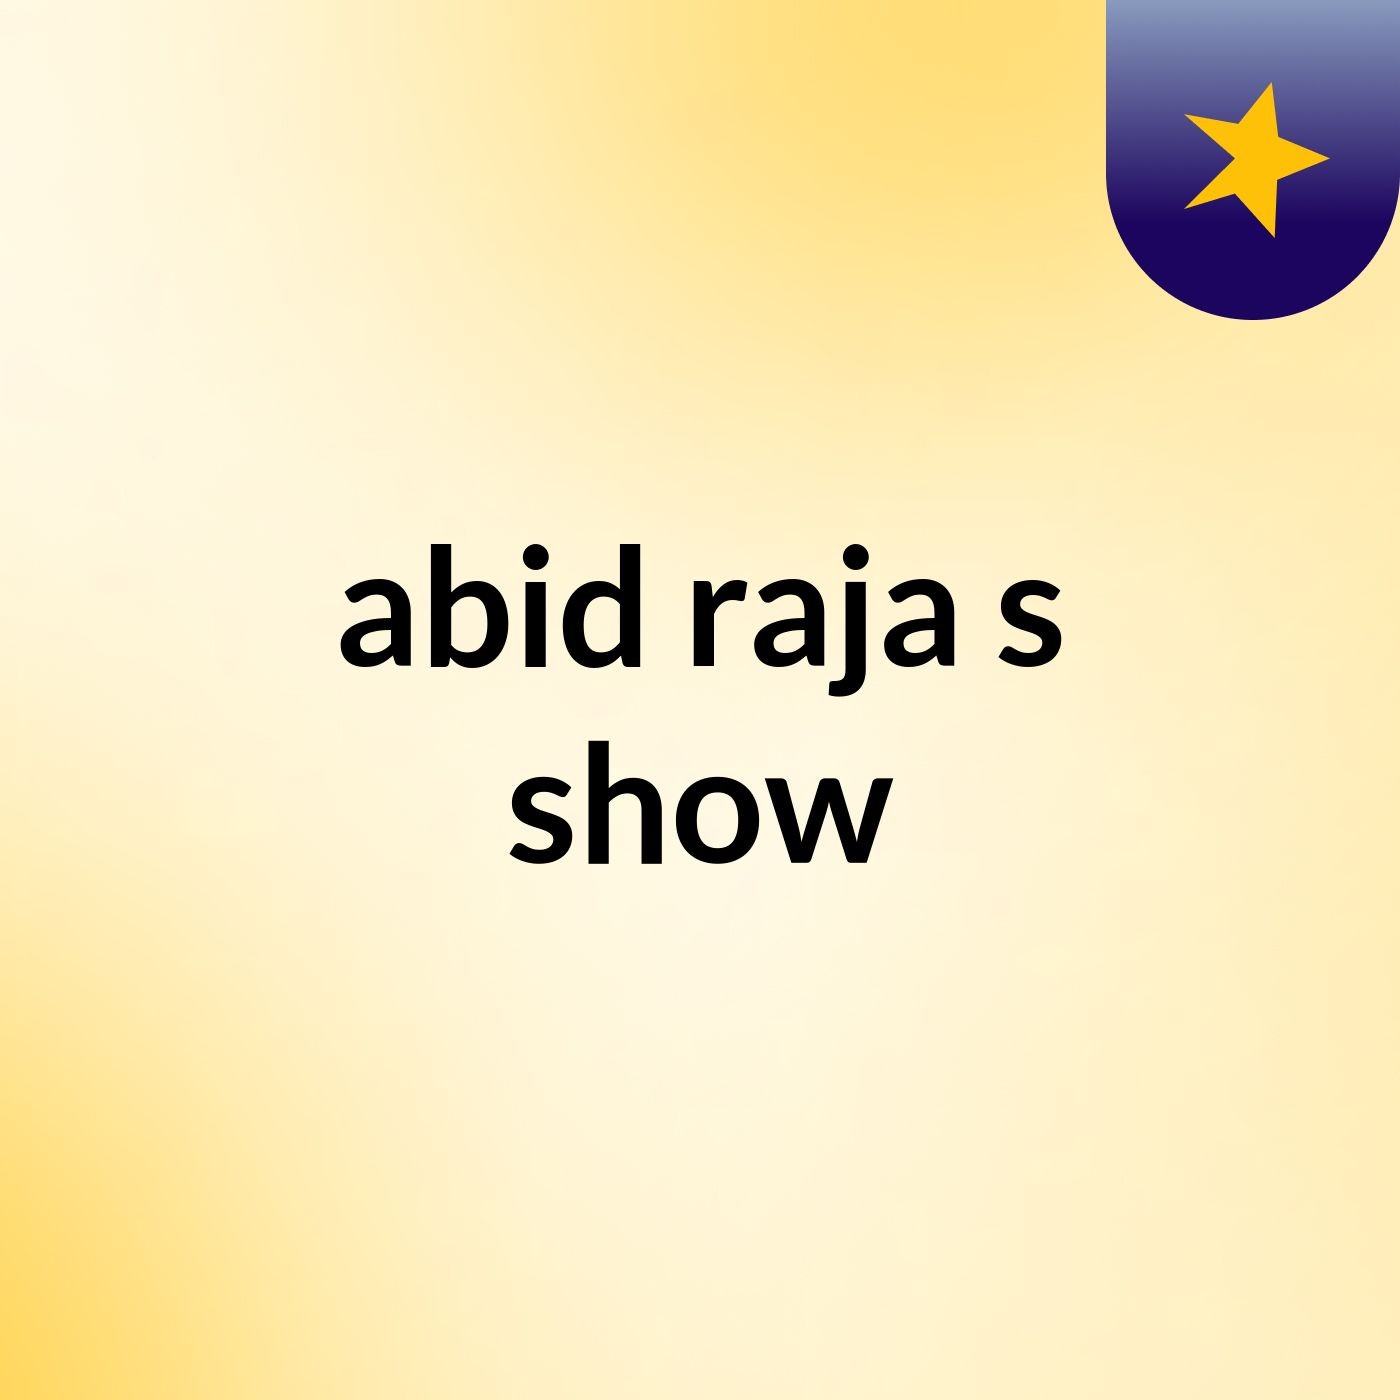 abid raja's show